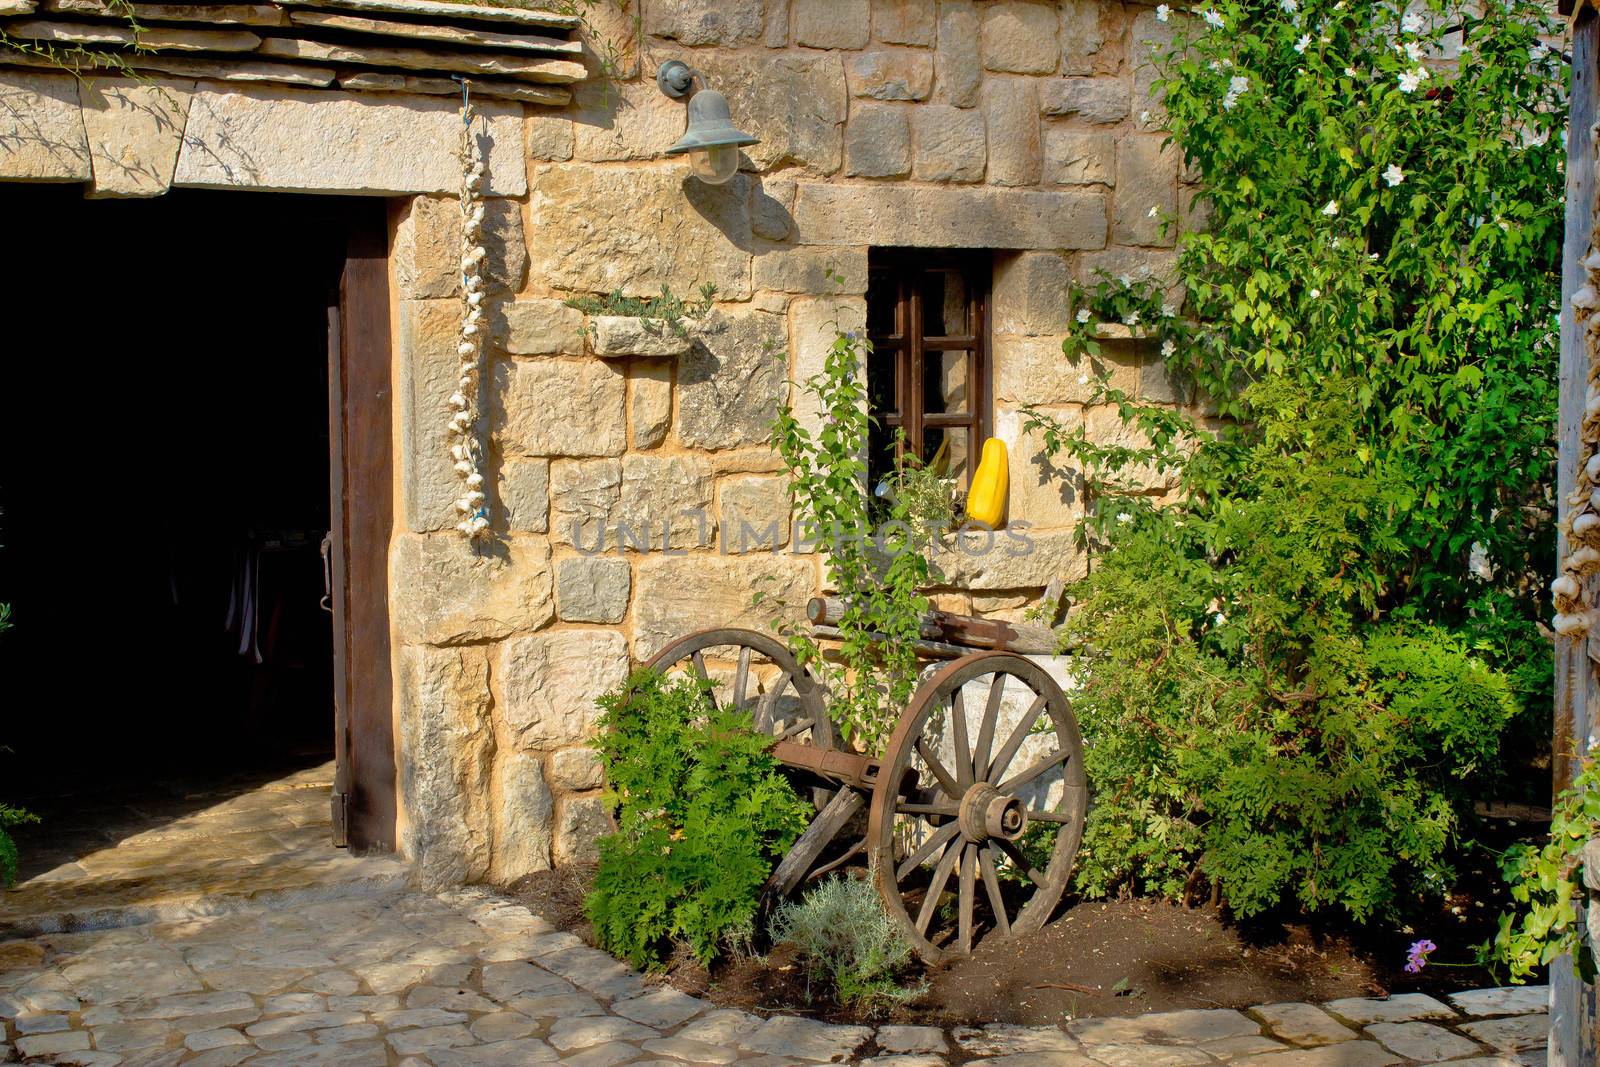 Old rusty plough in stone street of Dalmatian village